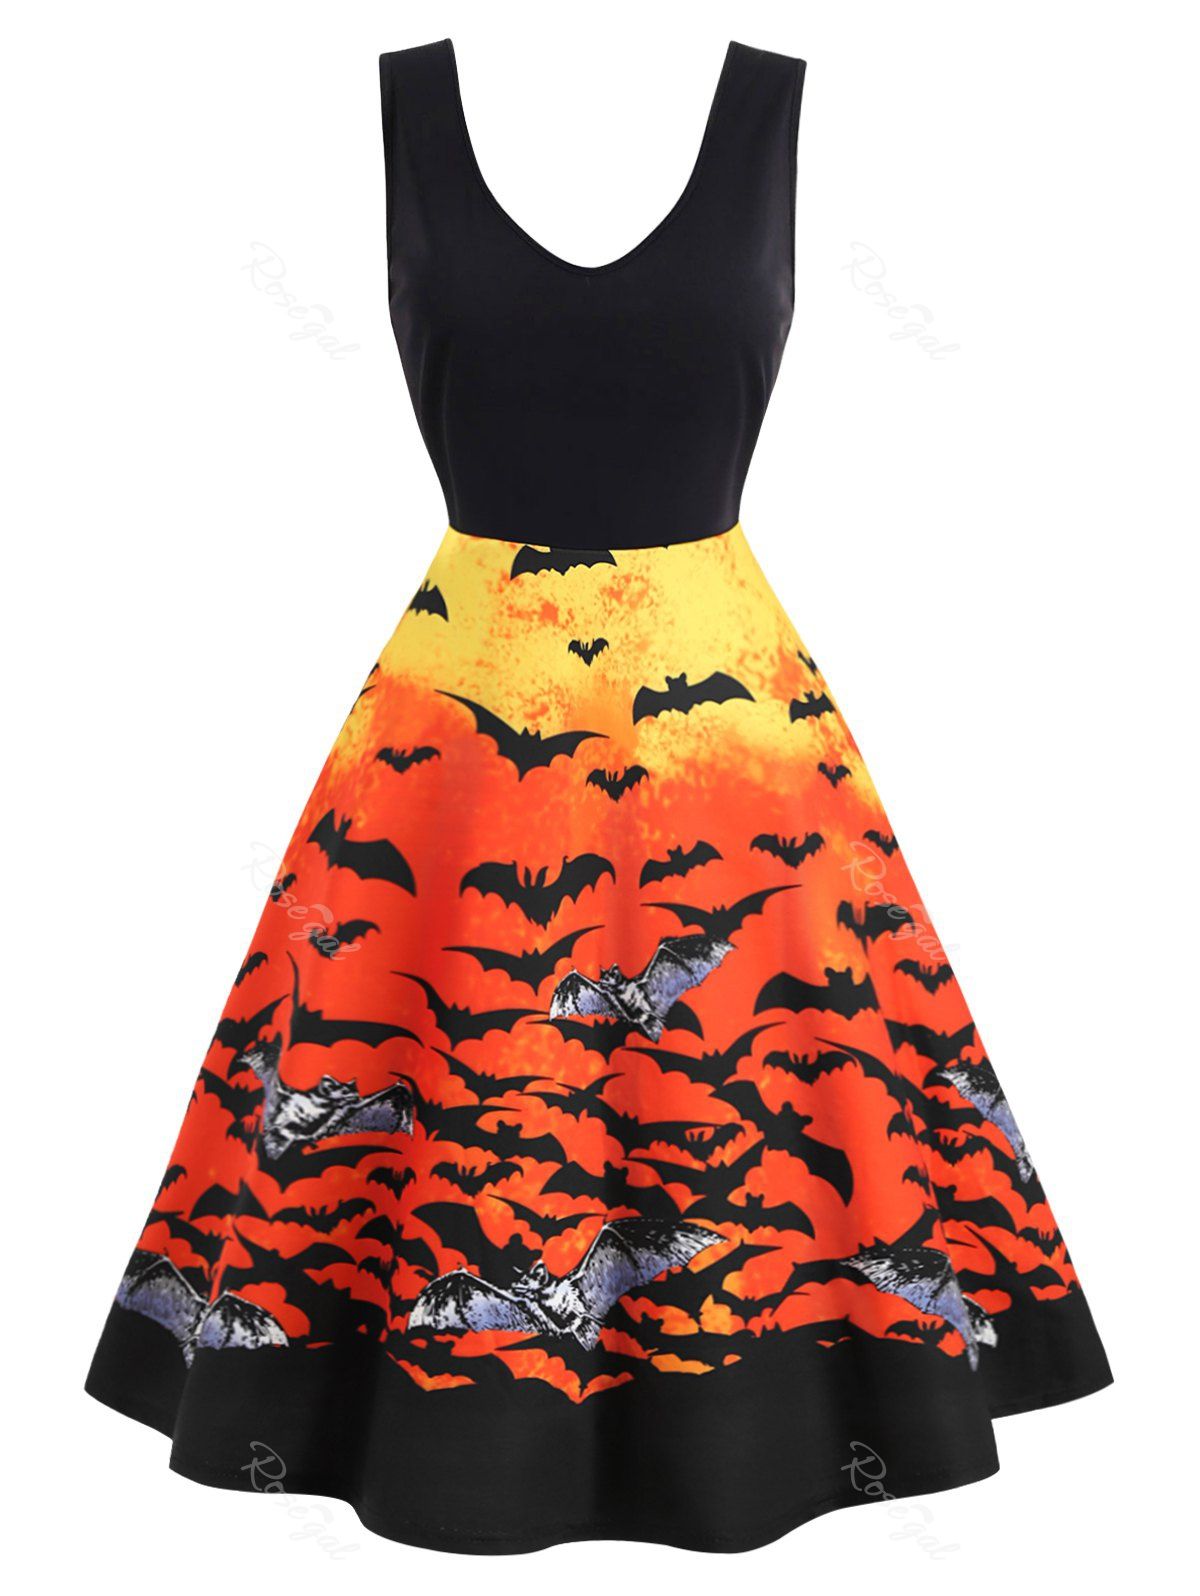 [57% OFF] Plus Size Retro Bat Print Gothic Halloween Pin Up Dress | Rosegal